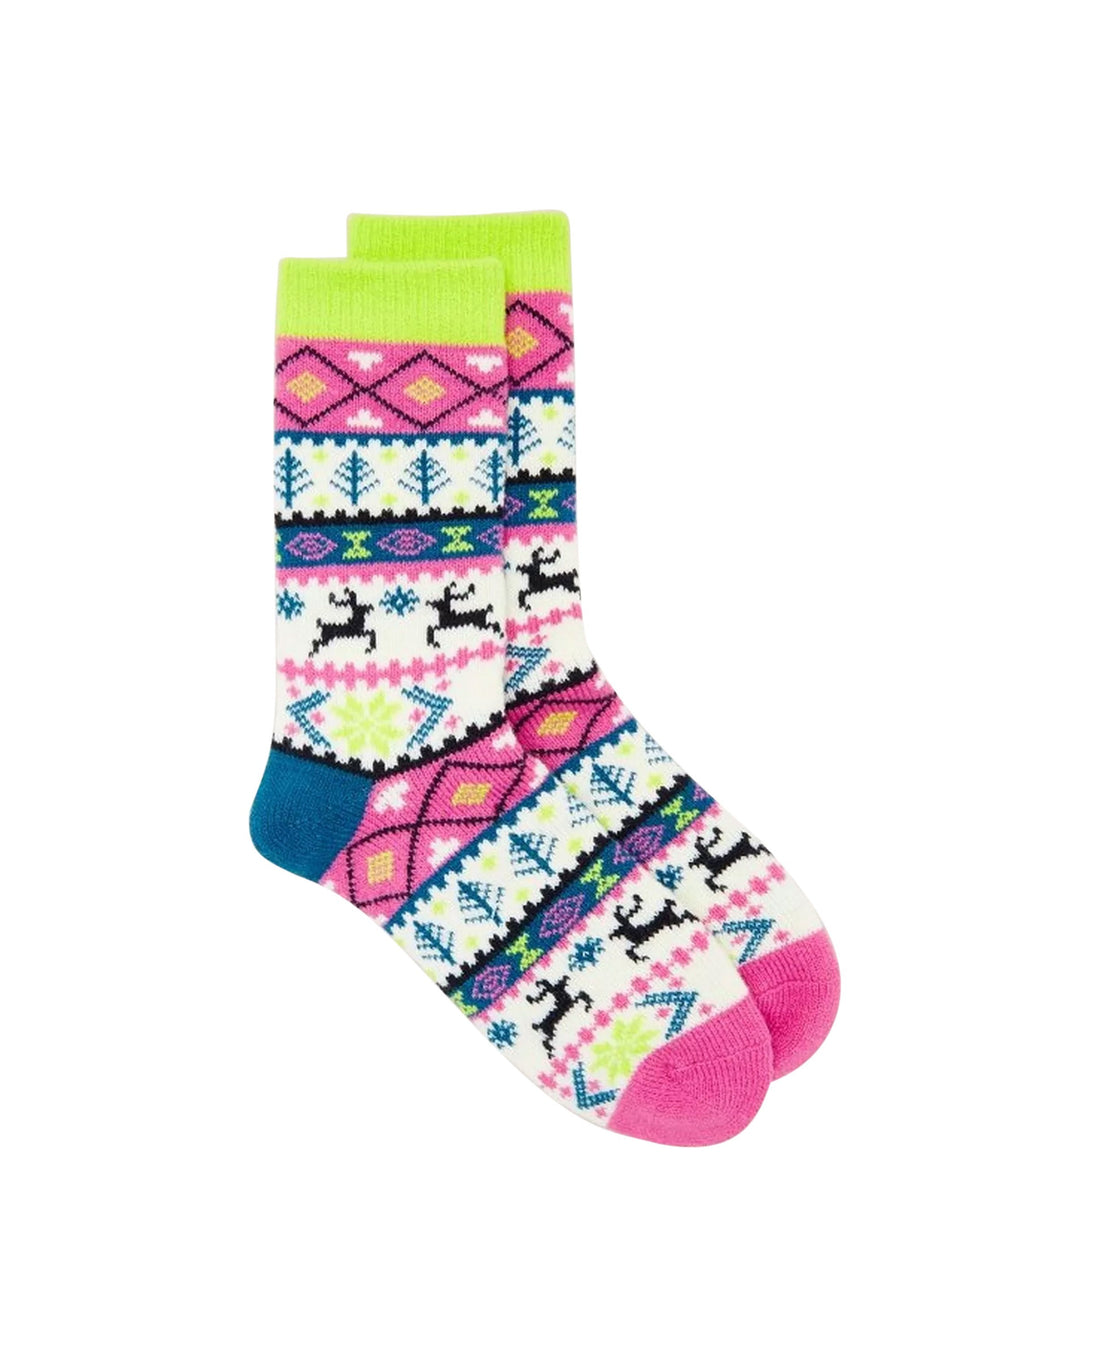 Reindeer Fairisle Cabin Socks - Pink Multi